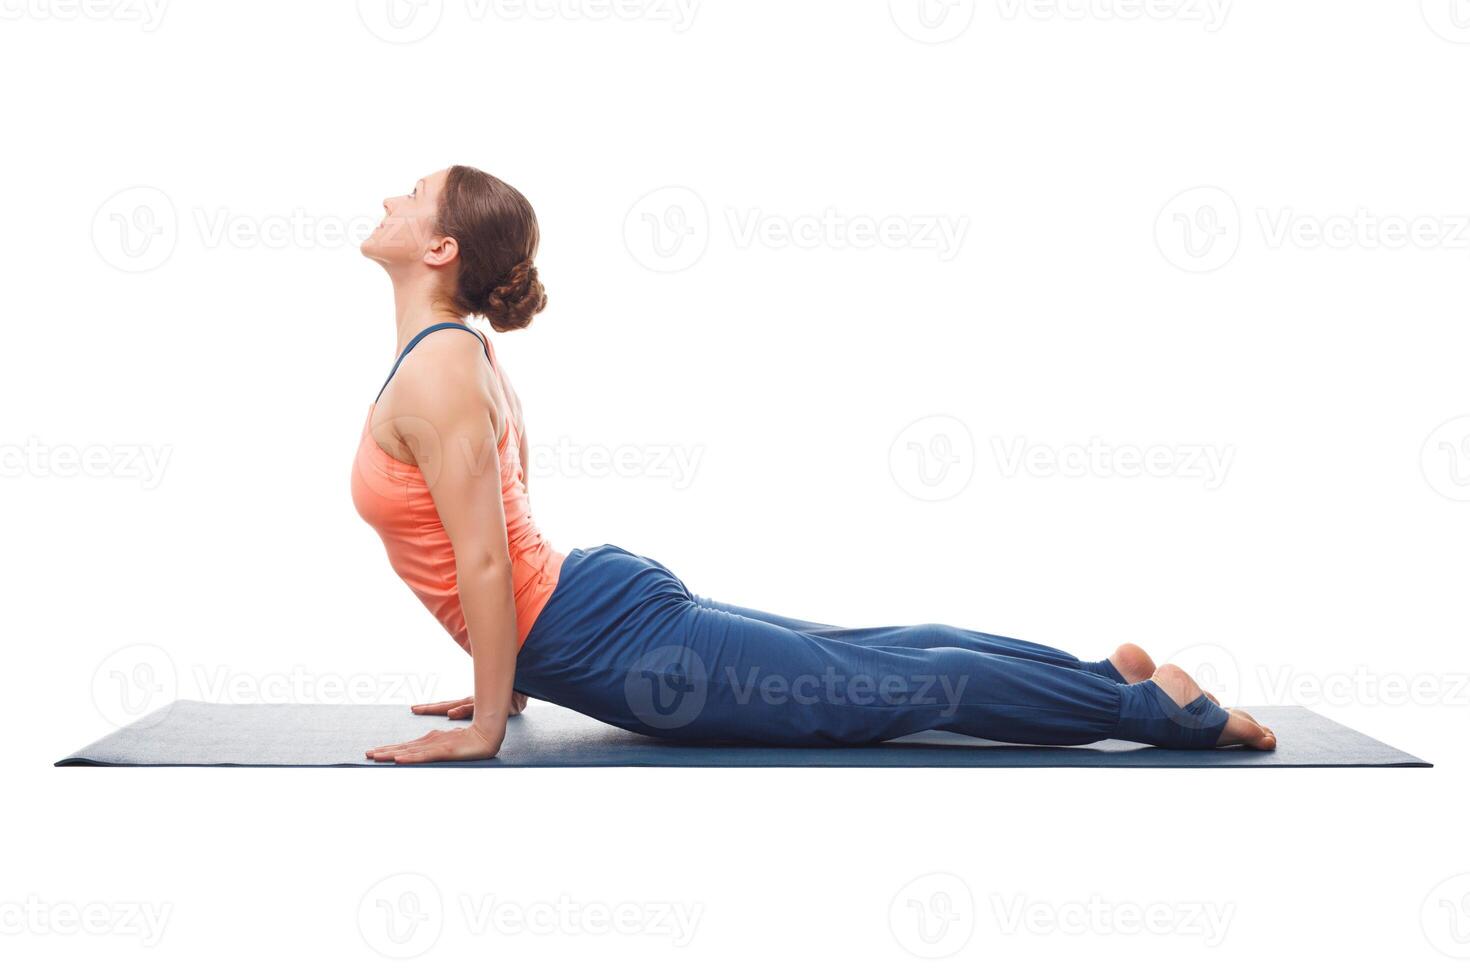 sportivo in forma yogini donna pratiche yoga asana urdhva mukha svanas foto